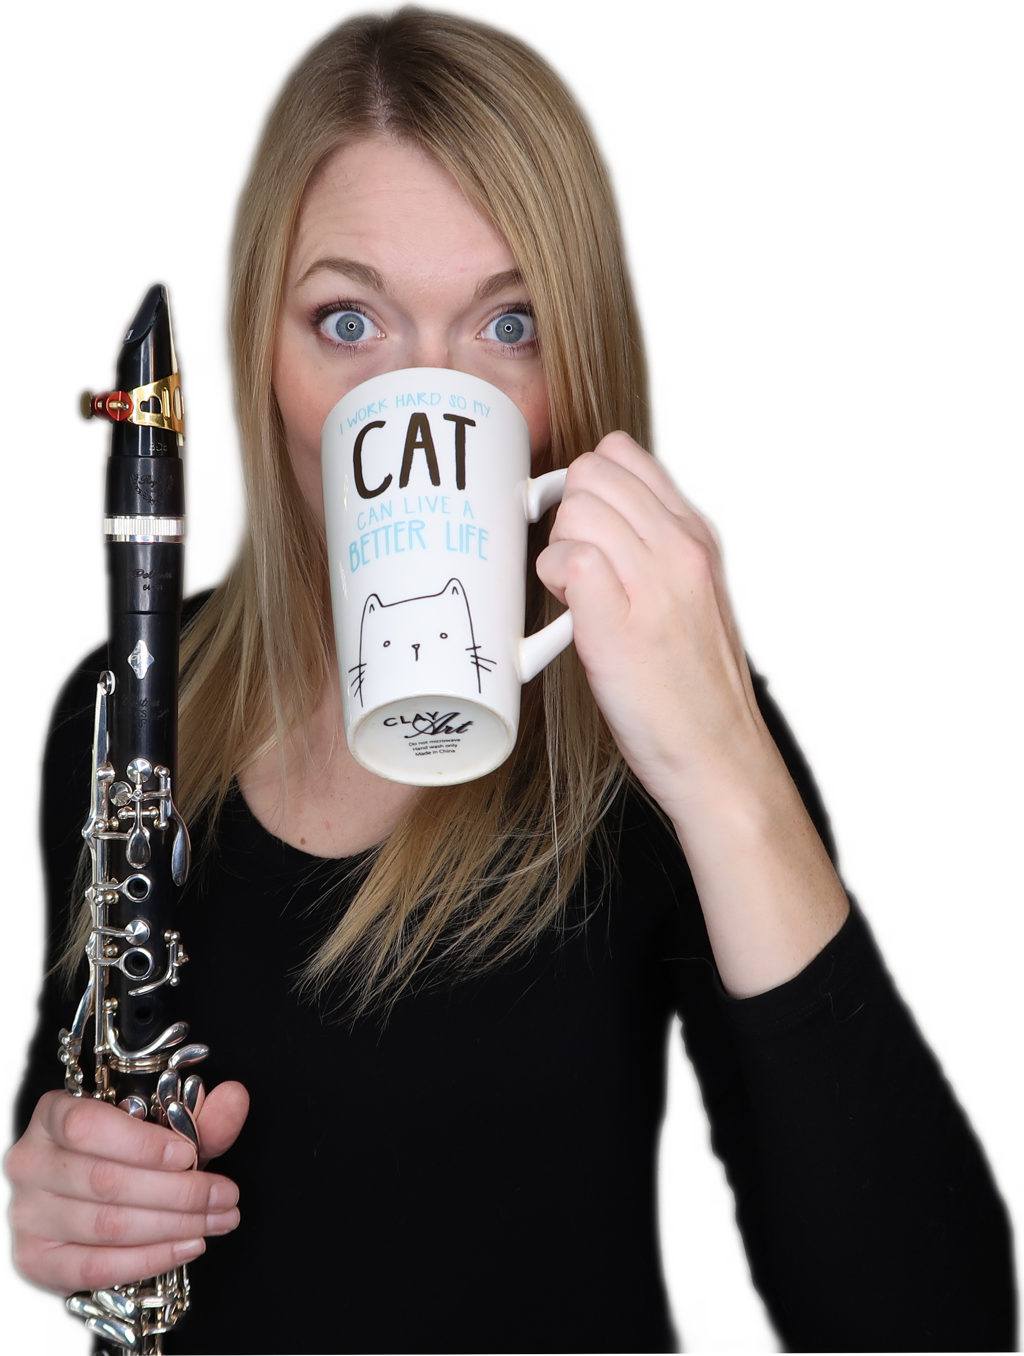 clarinet-articulation-tips-short-etude-in-f-major-cally-laughlin